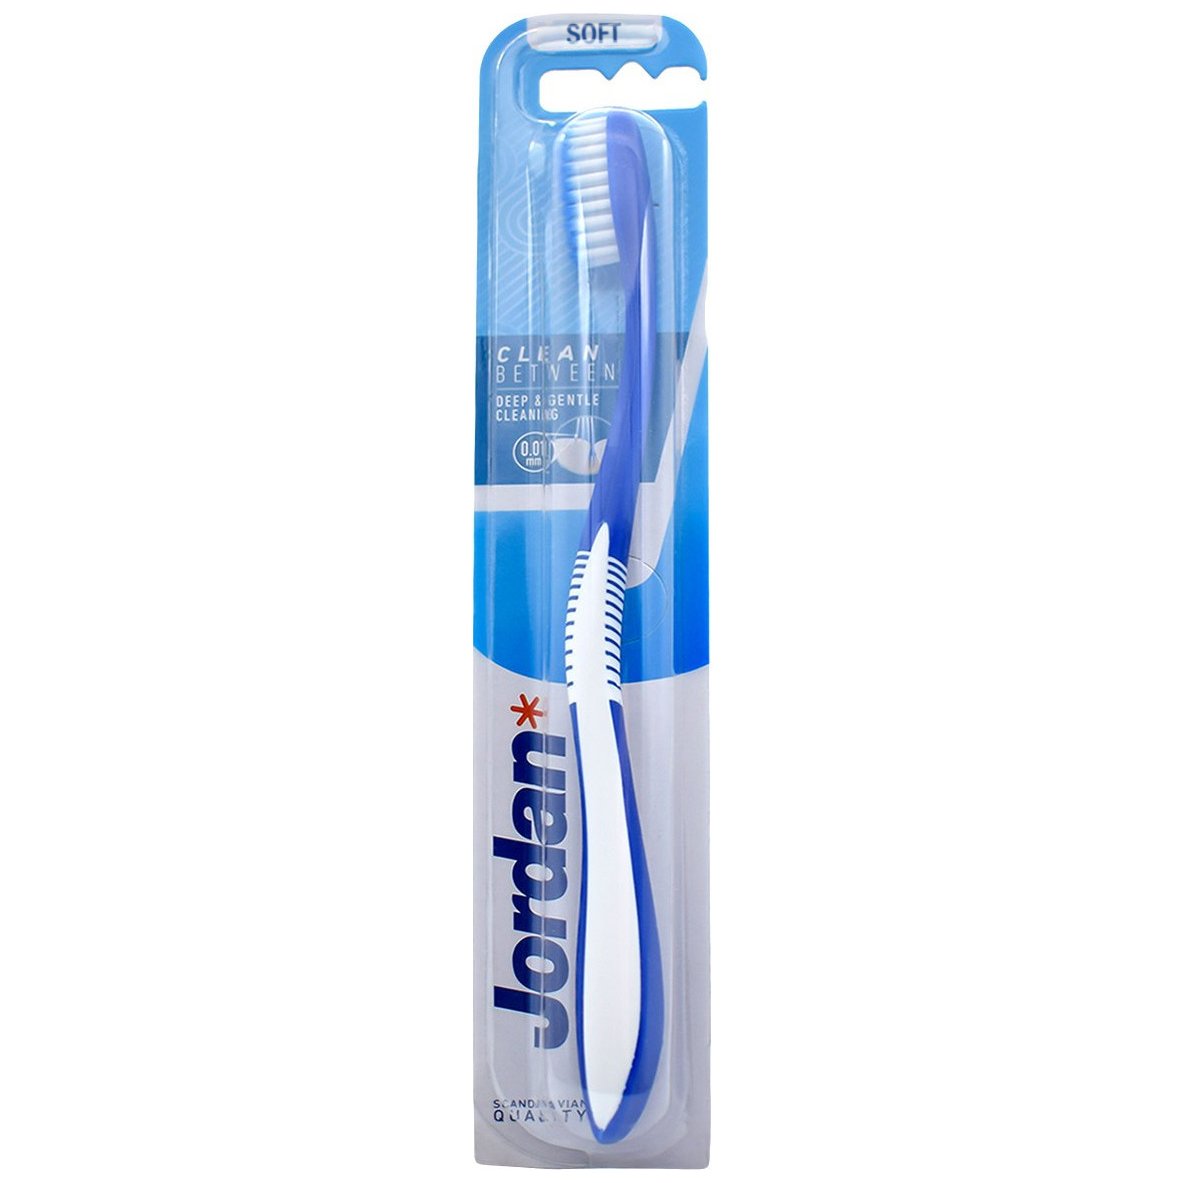 Jordan Clean Between Toothbrush Soft 0.01mm Μαλακή Οδοντόβουρτσα για Βαθύ Καθαρισμό με Εξαιρετικά Λεπτές Ίνες 1 Τεμάχιο, Κωδ 310036 – Μπλε